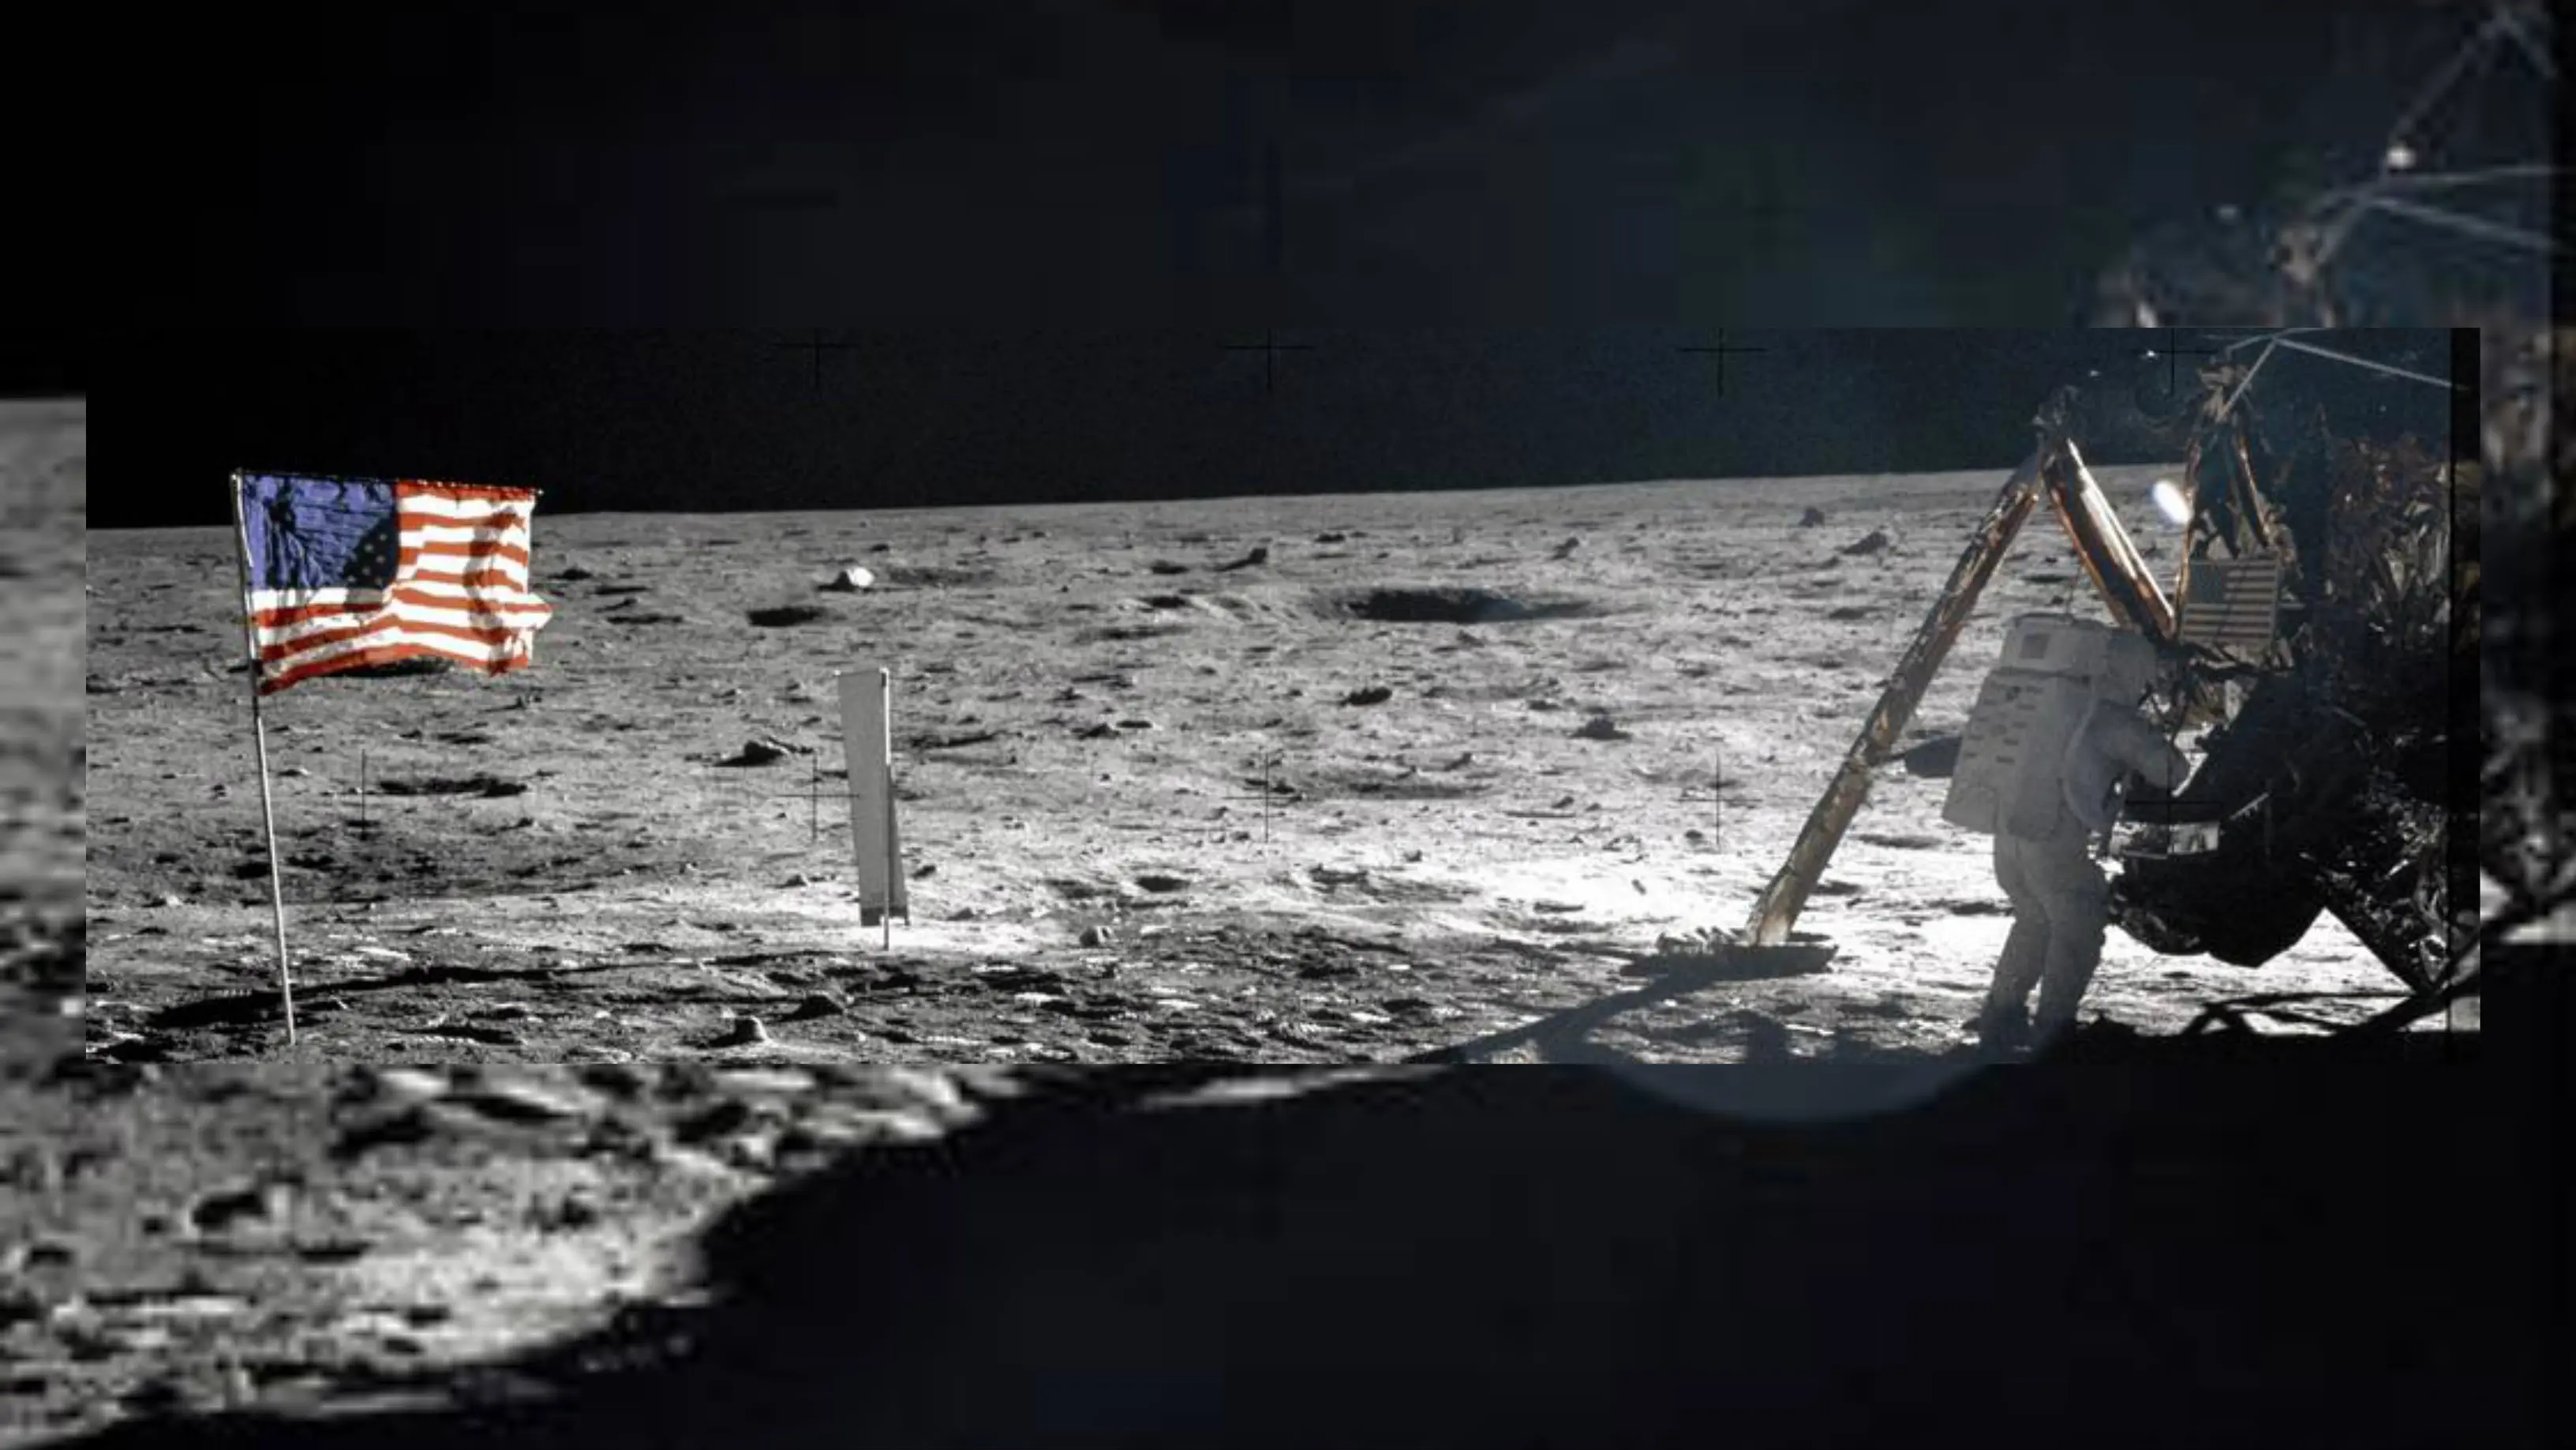 Neil Armstrong di Bulan. (Nasa.gov)